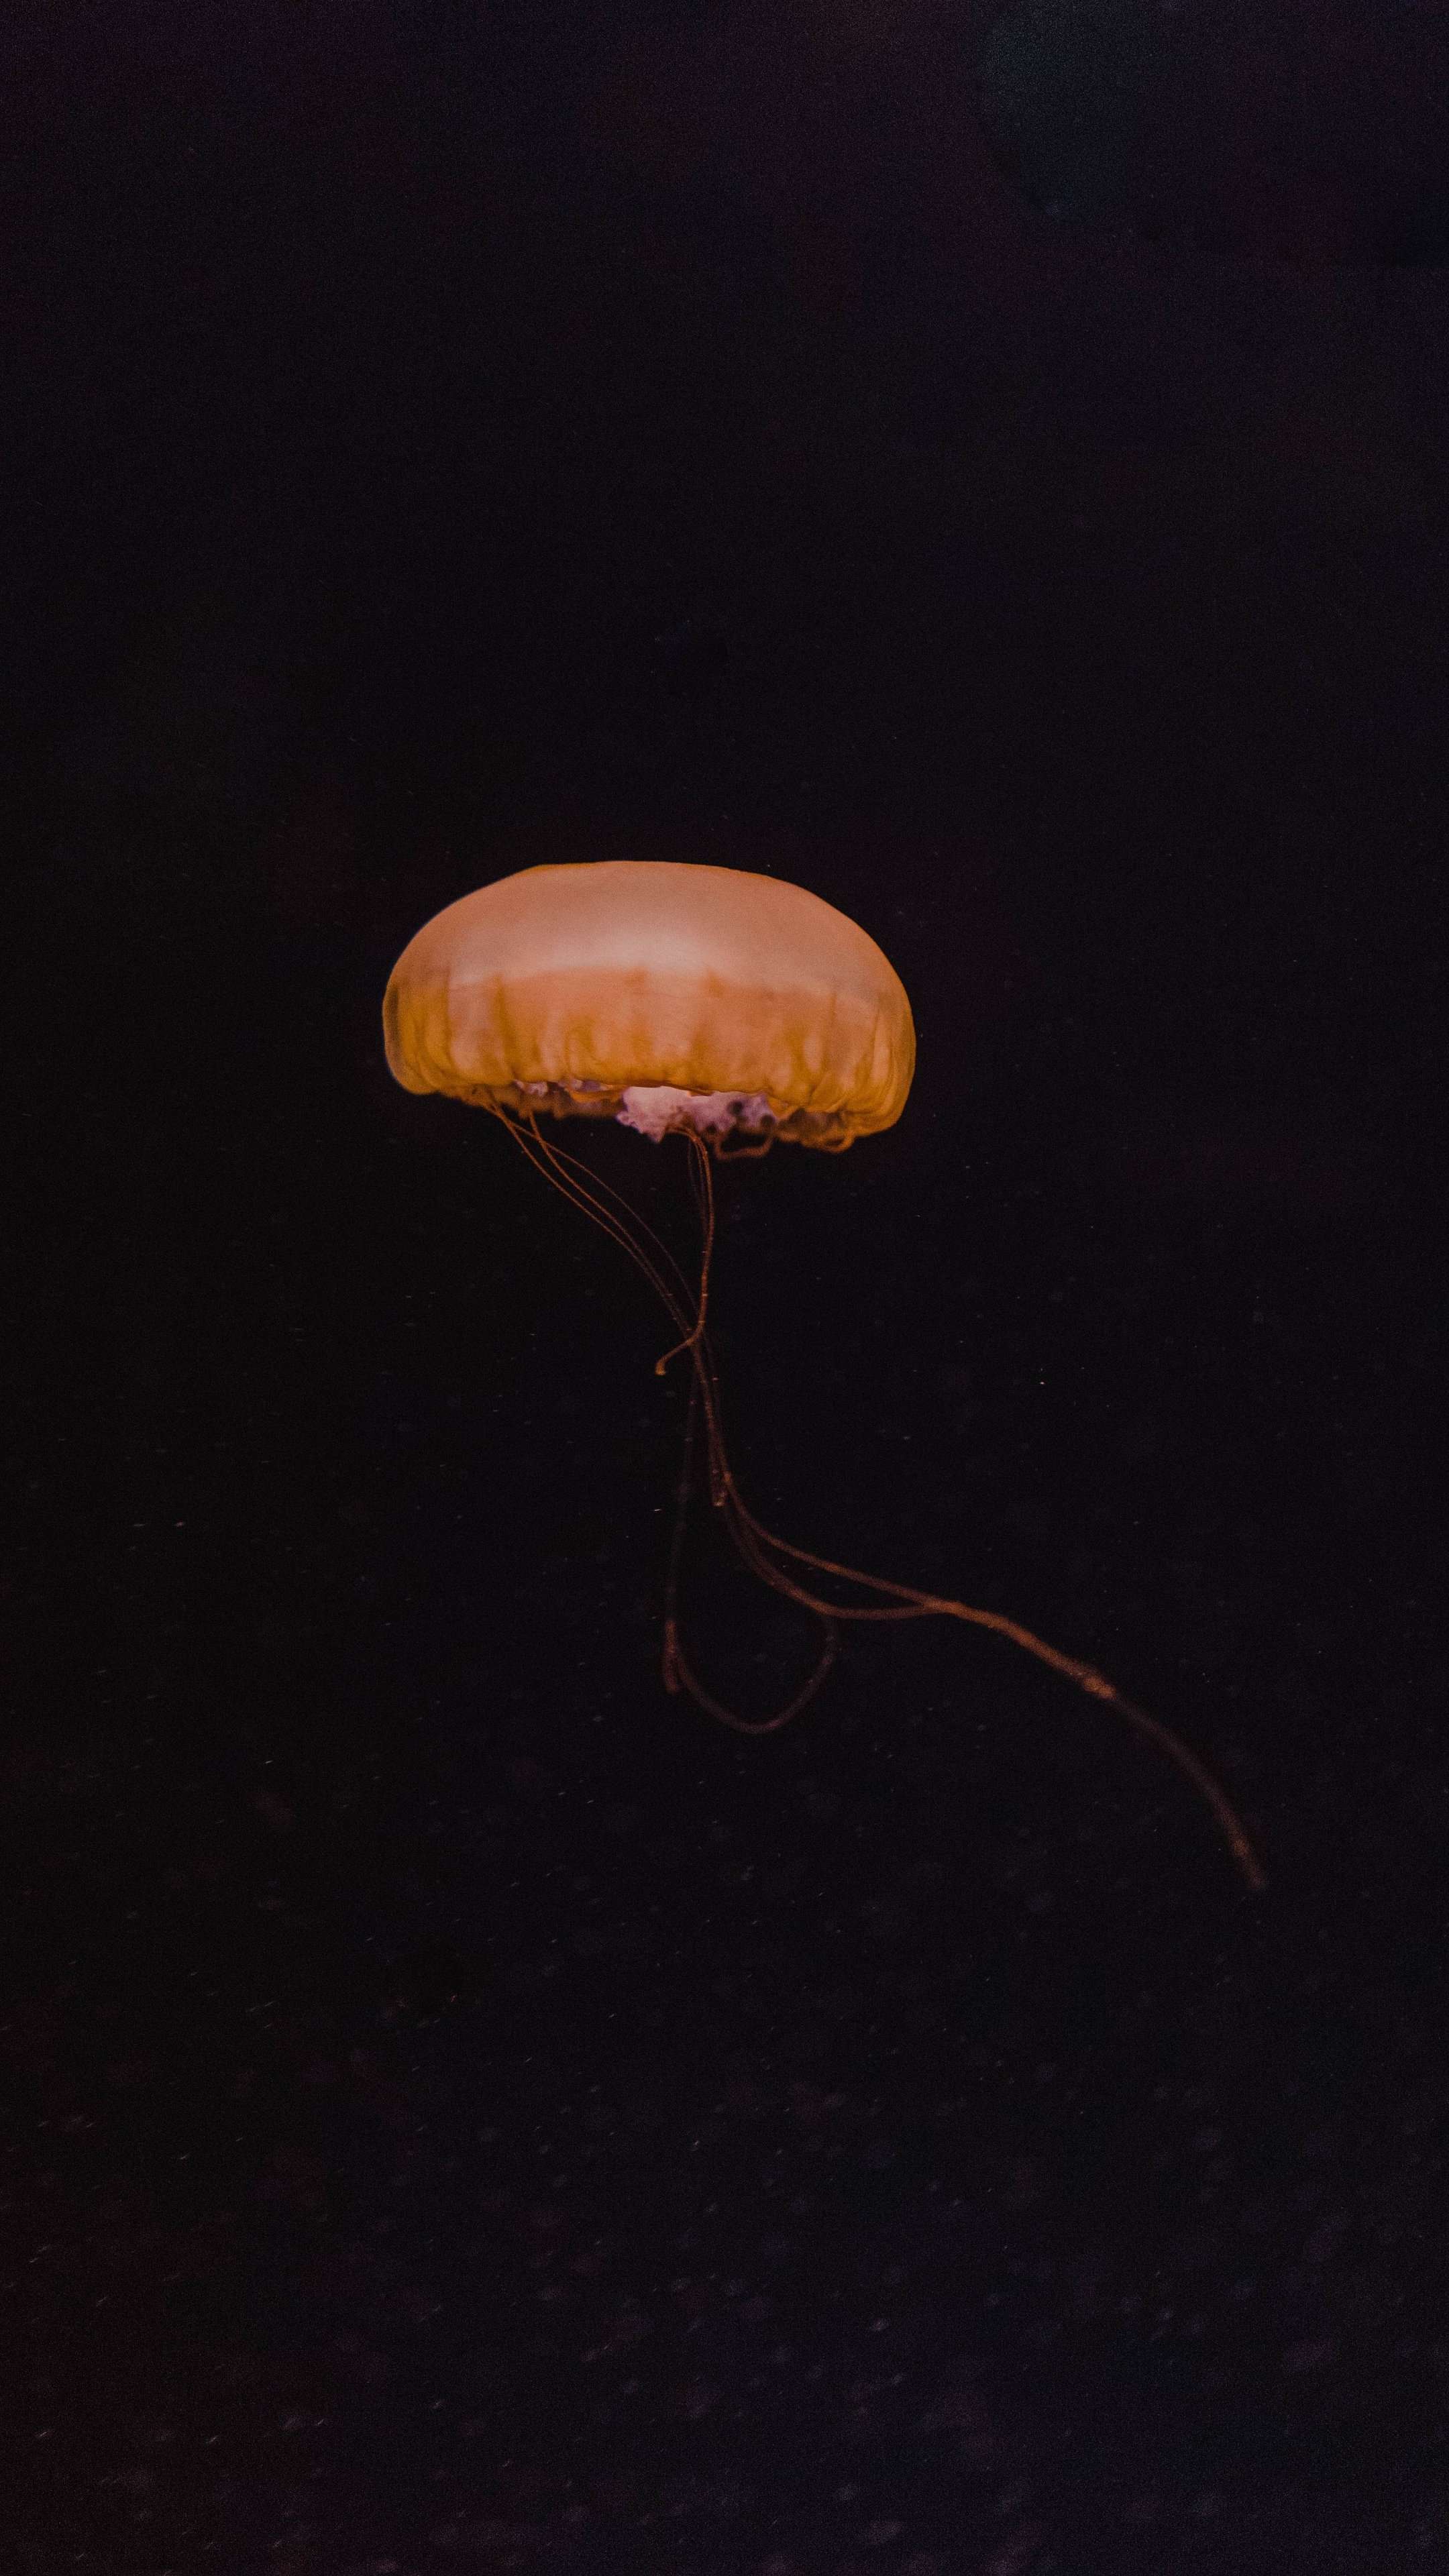 Jellyfish Wallpaper Jelly Fish  Free photo on Pixabay  Pixabay